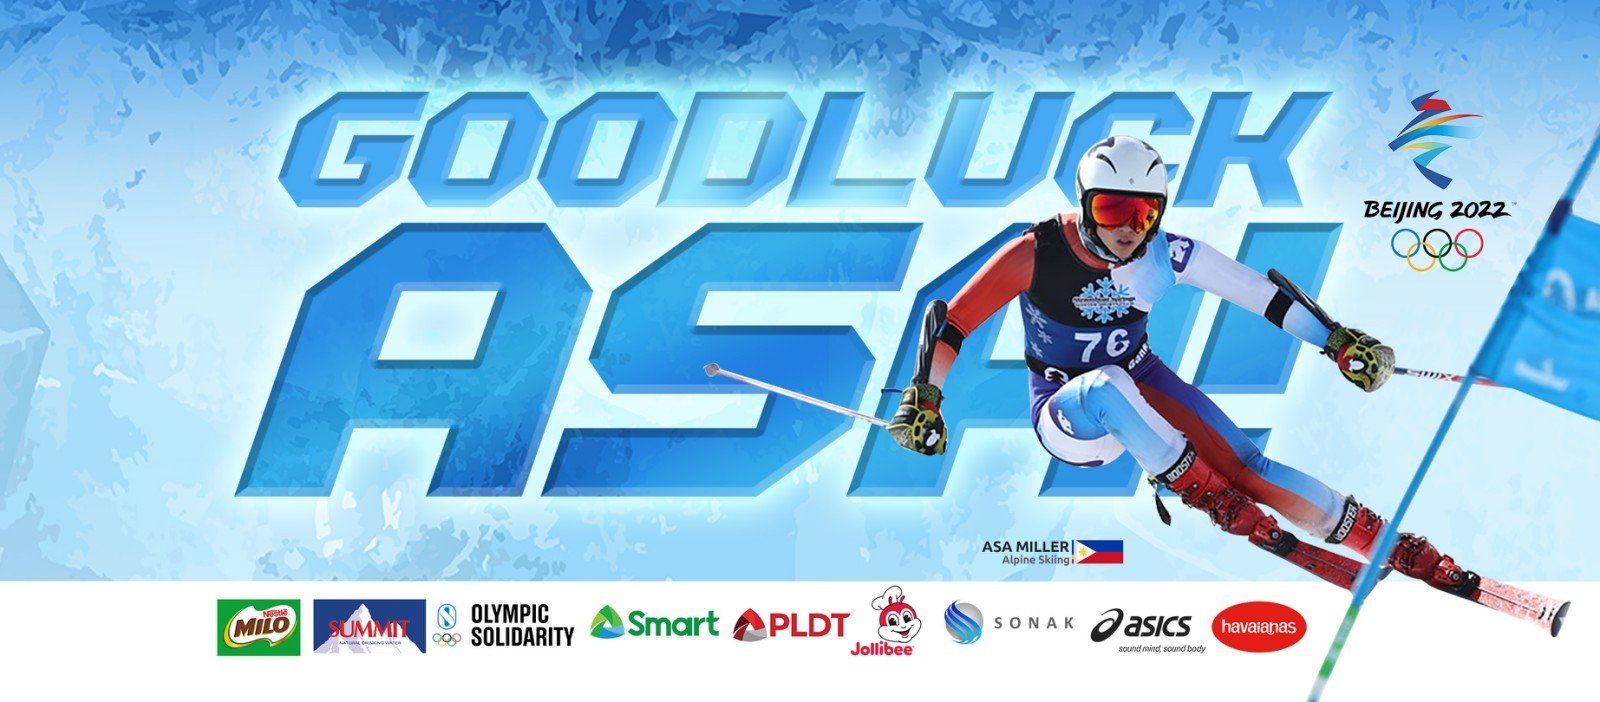 Asa Miller: Filipino skier, sole hope of the nation for Beijing